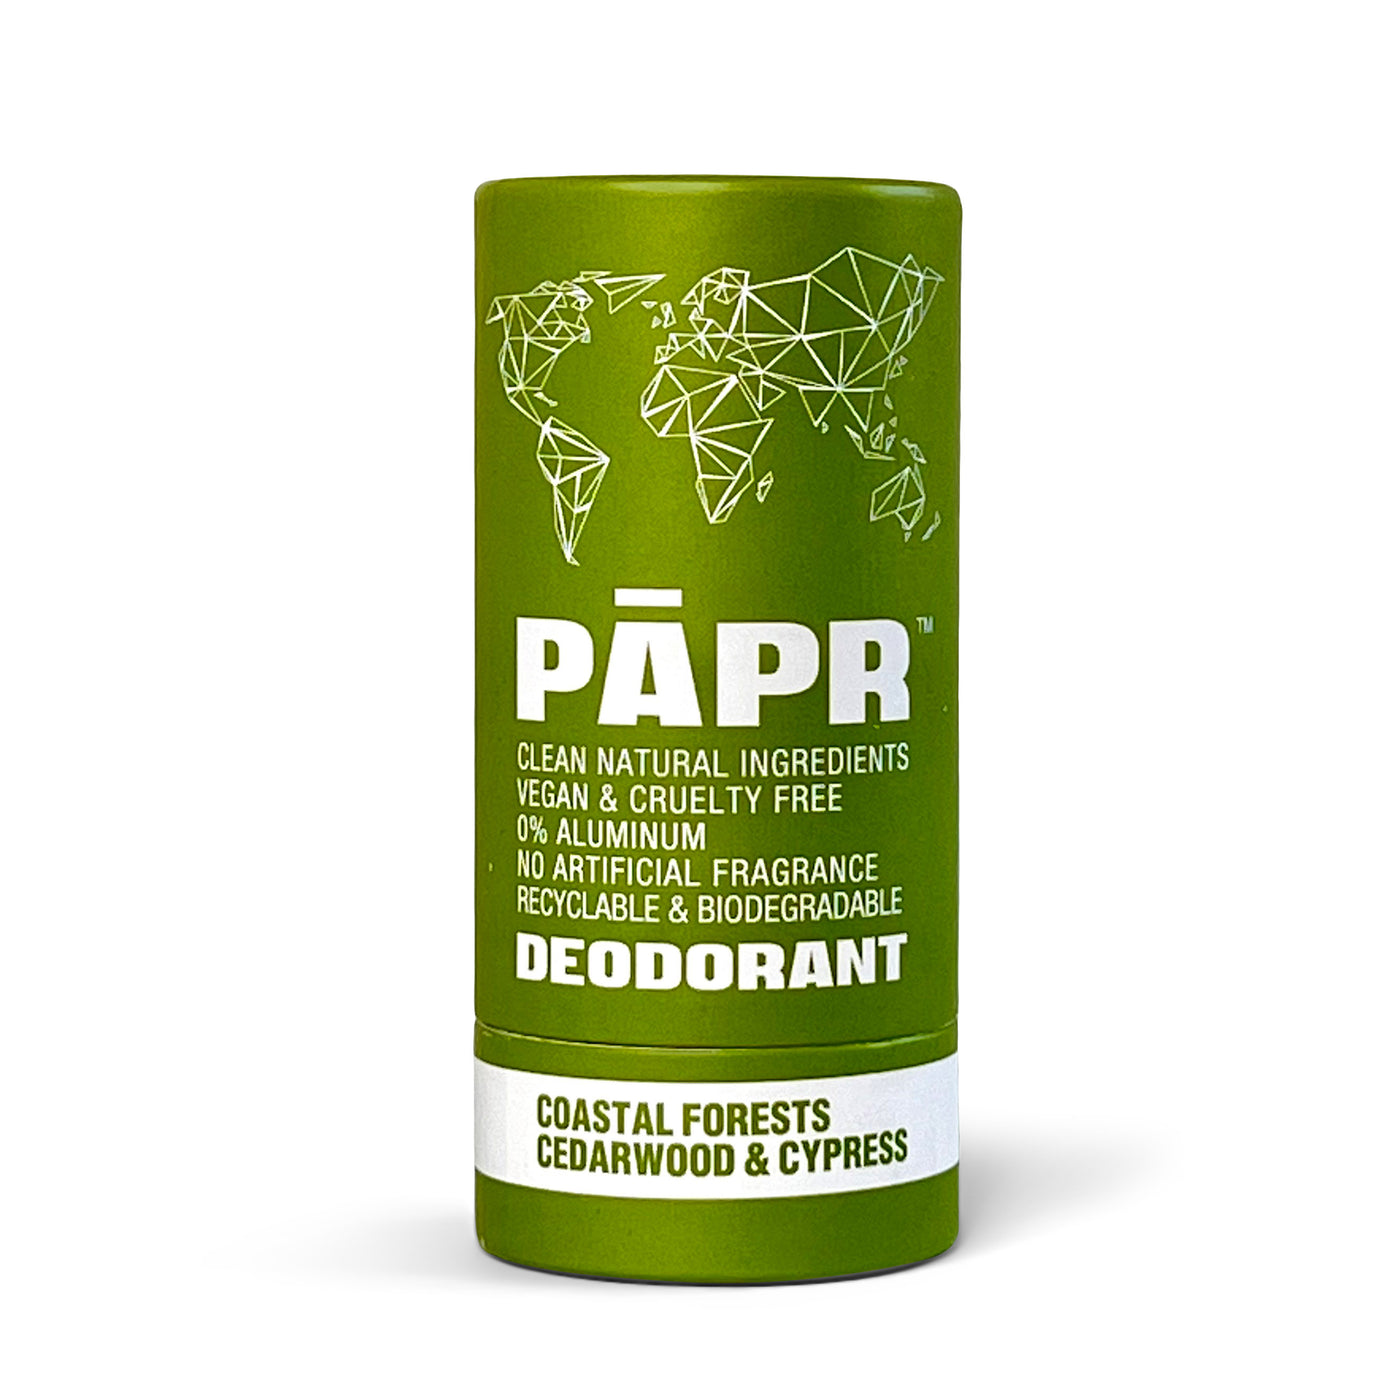 PAPR Deodorant: Coastal Forests, Cedarwood & Cypress, 2.65 oz.